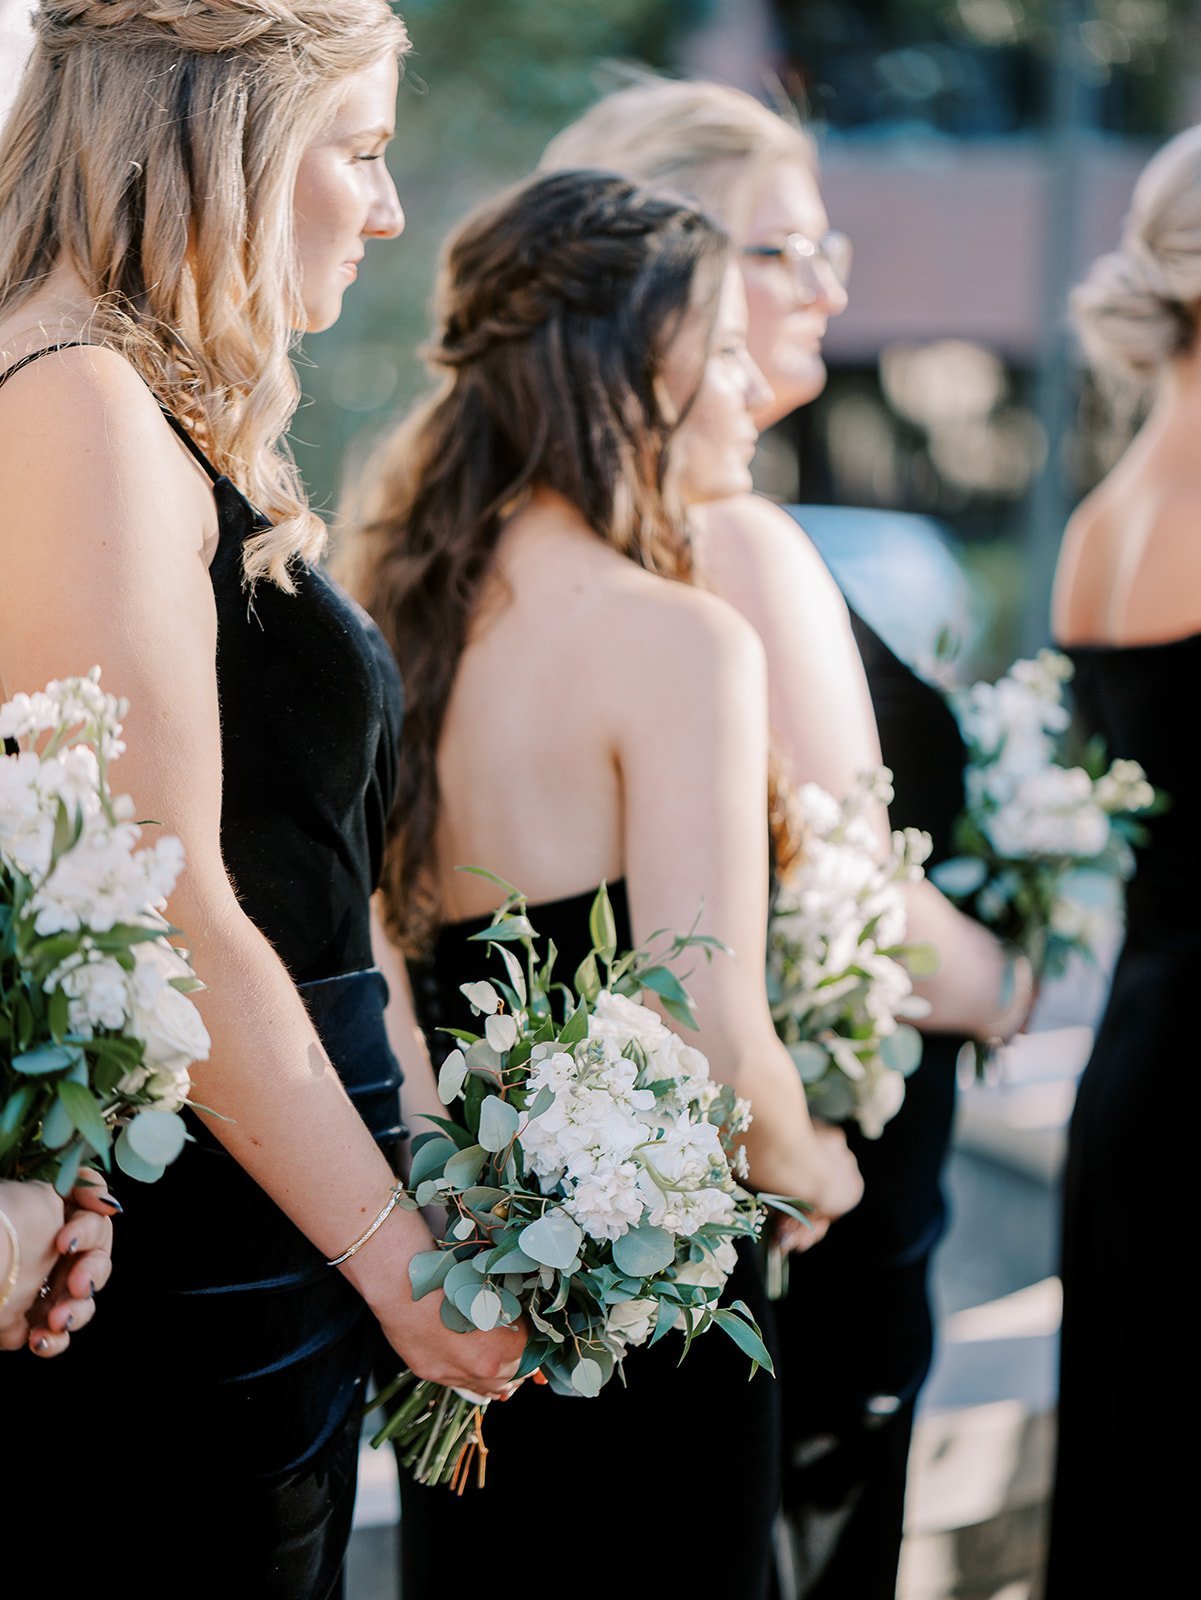 black bridesmaids dresses with ivory bridesmaids bouquet